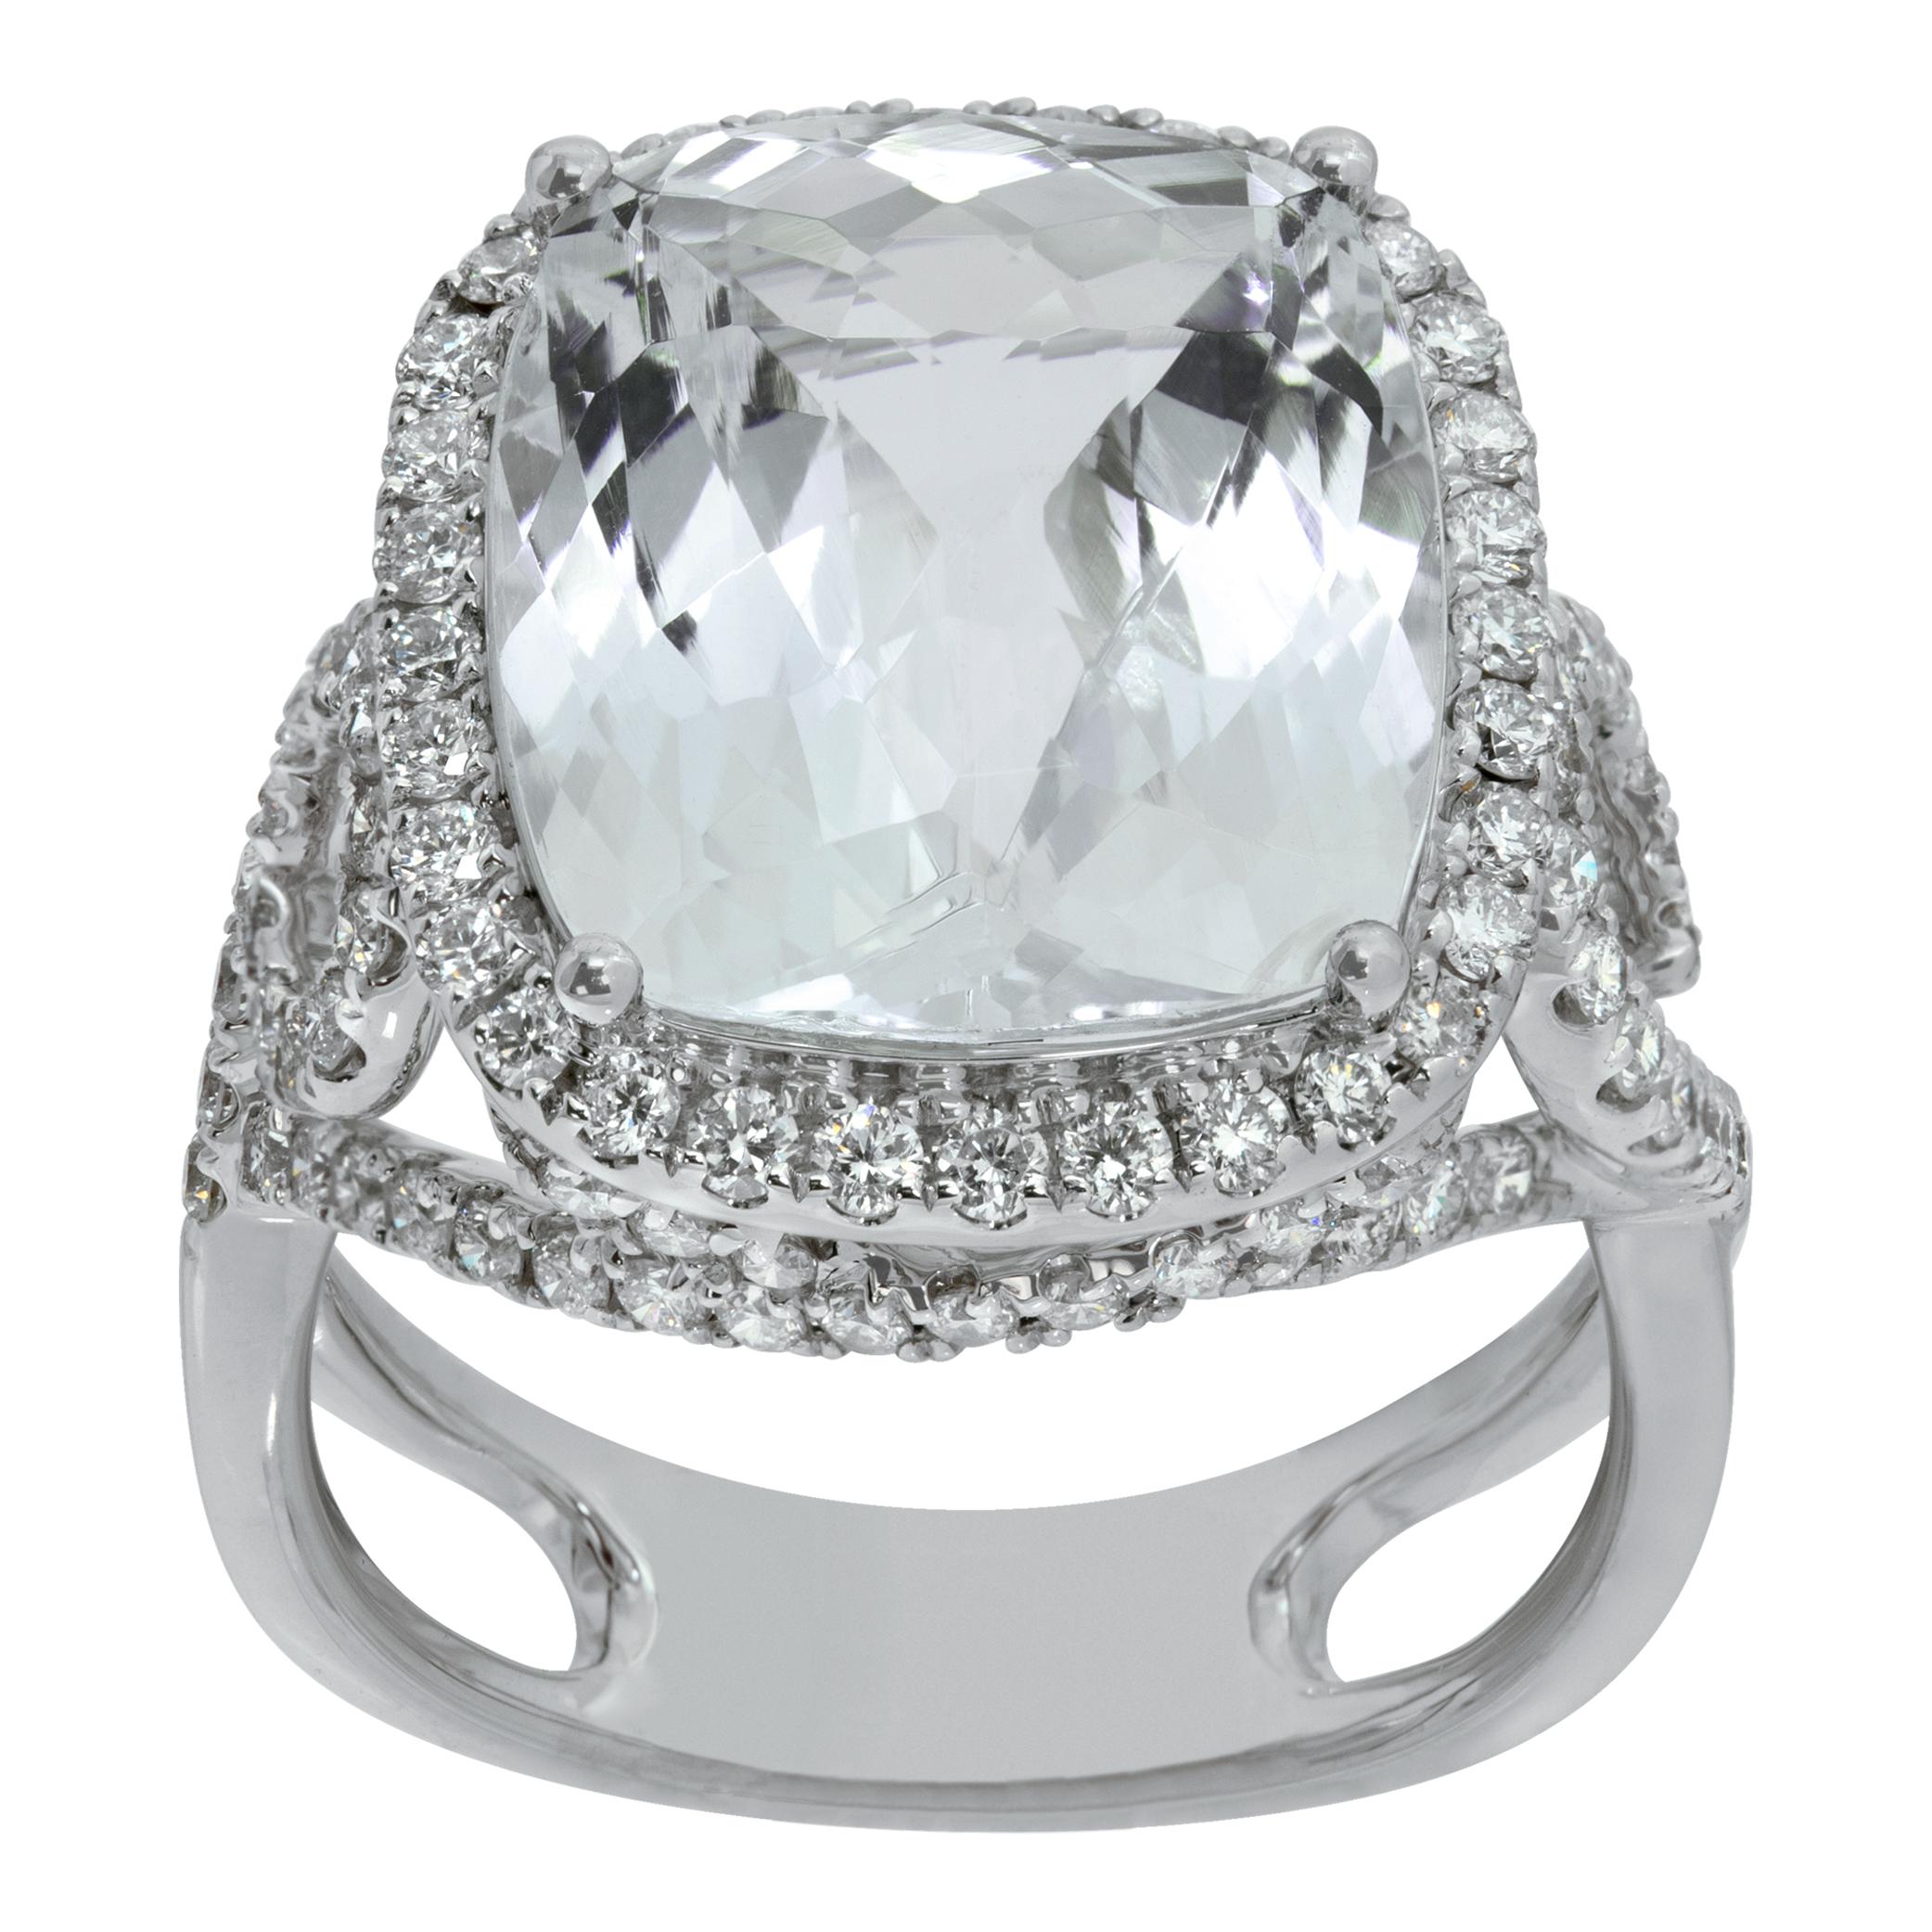 Aquamarine & diamond 18k white gold ring